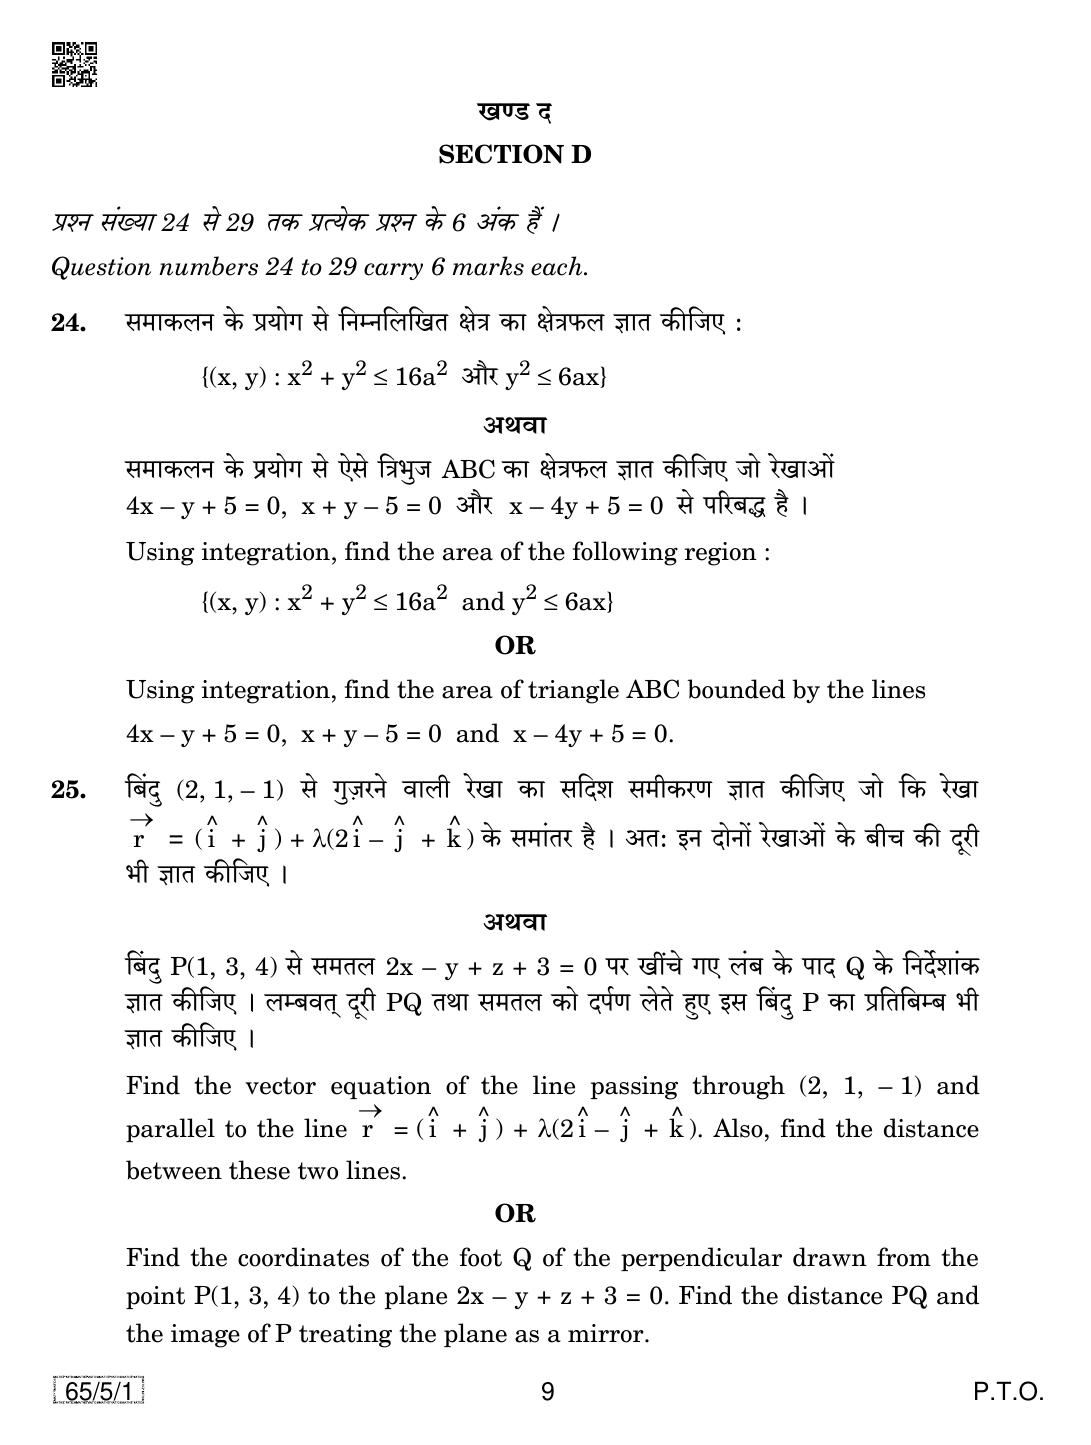 CBSE Class 12 65-5-1 Mathematics 2019 Question Paper - Page 9